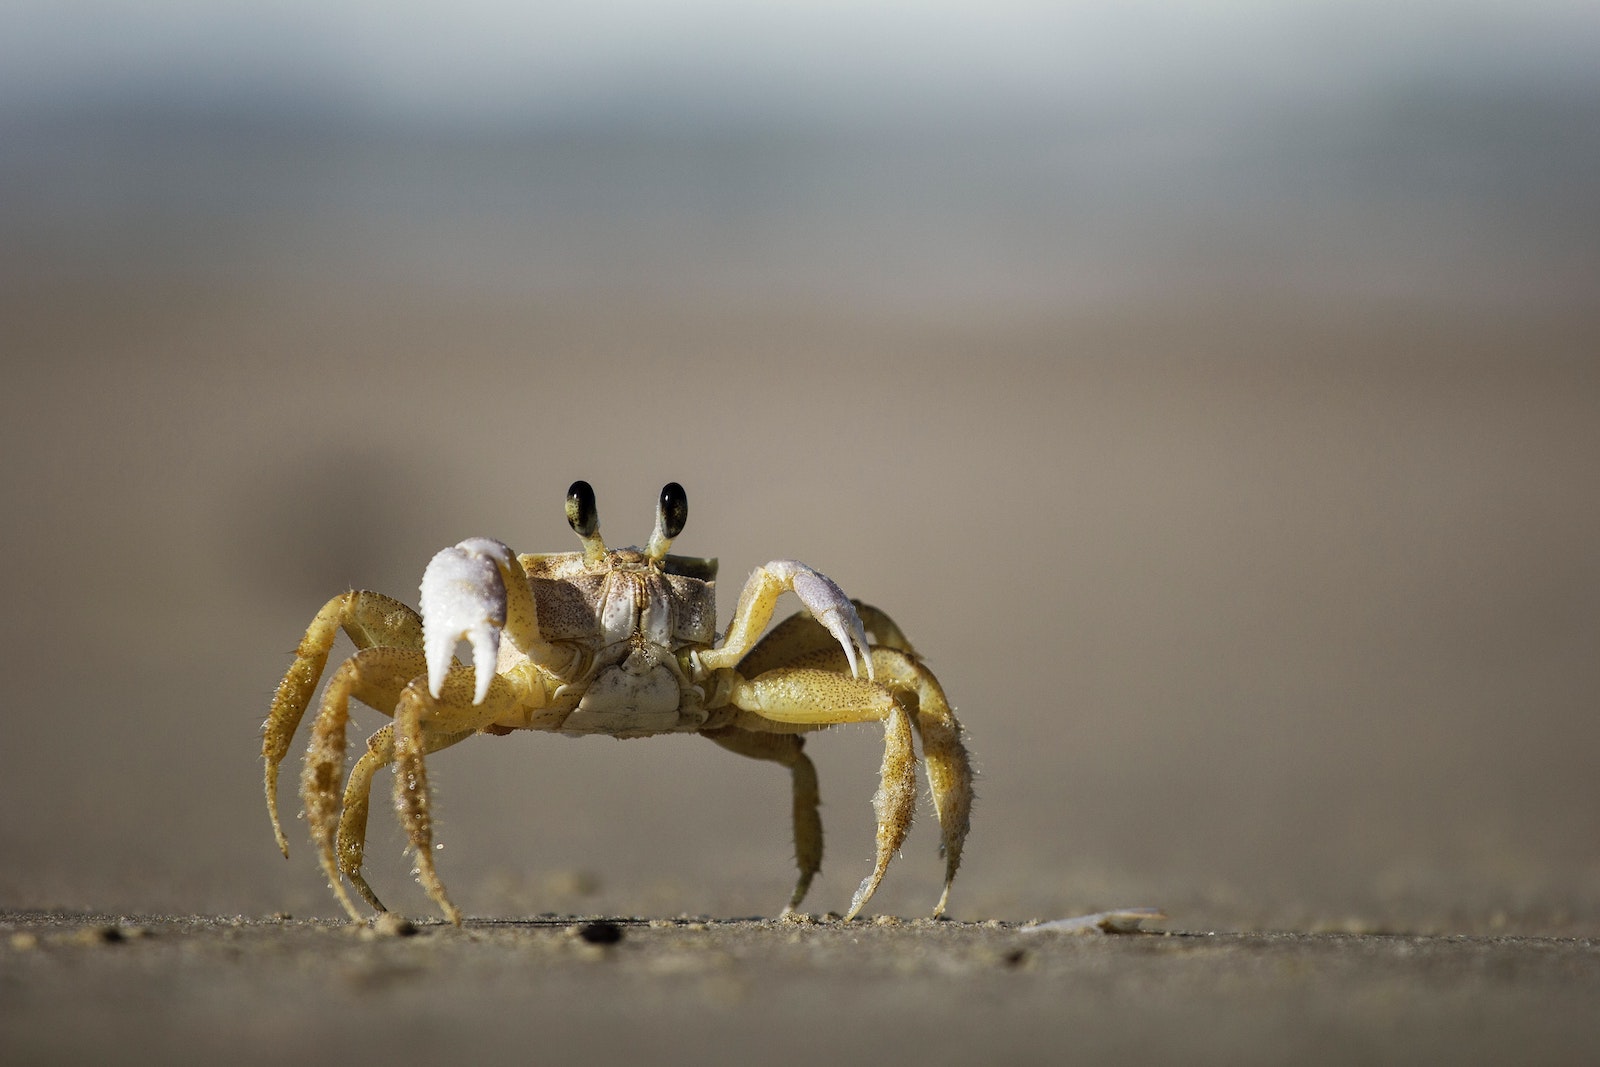 Bandit Crab